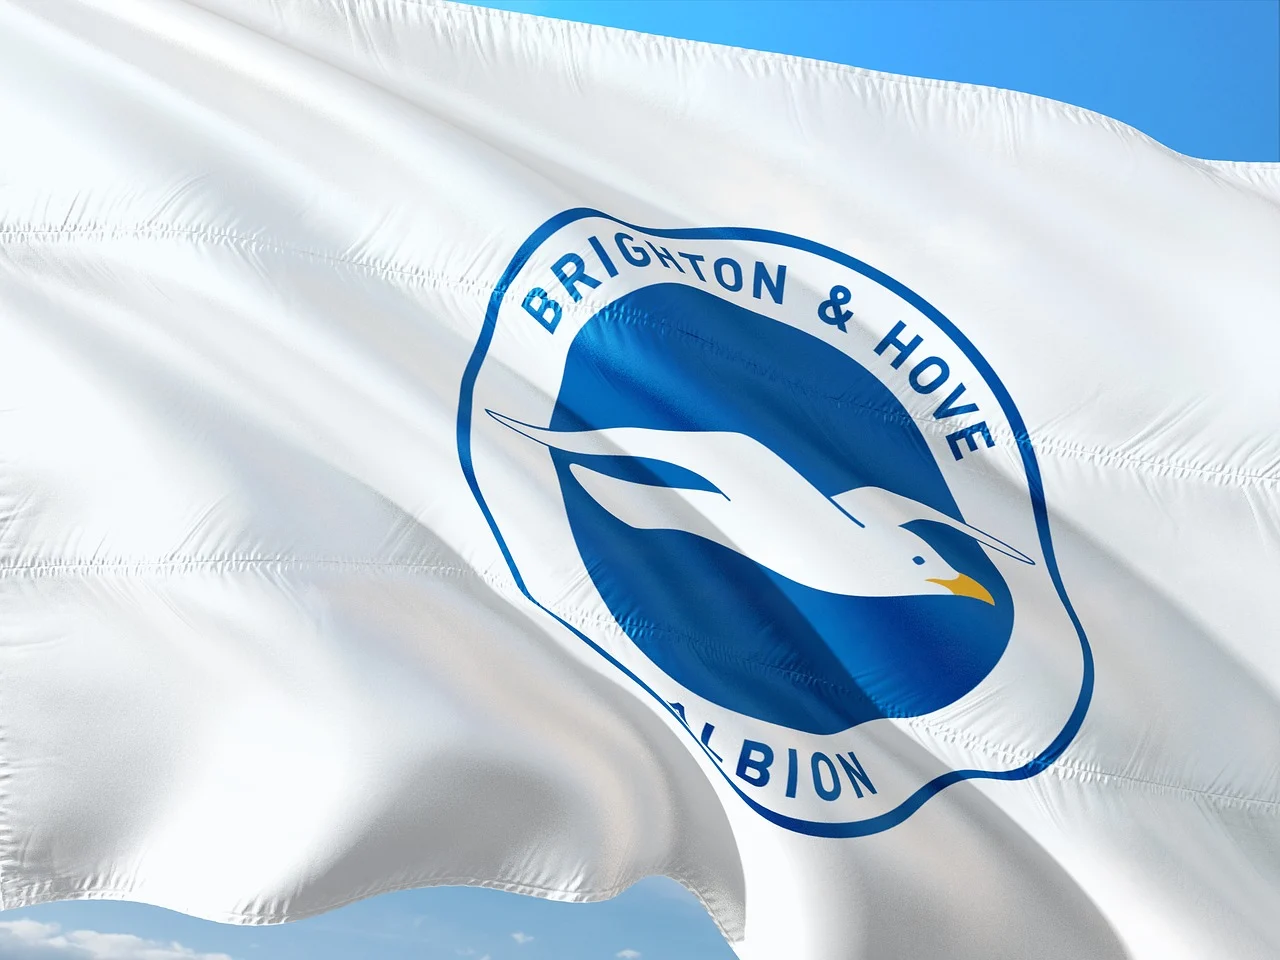 Brighton & Hove Albion partnership.